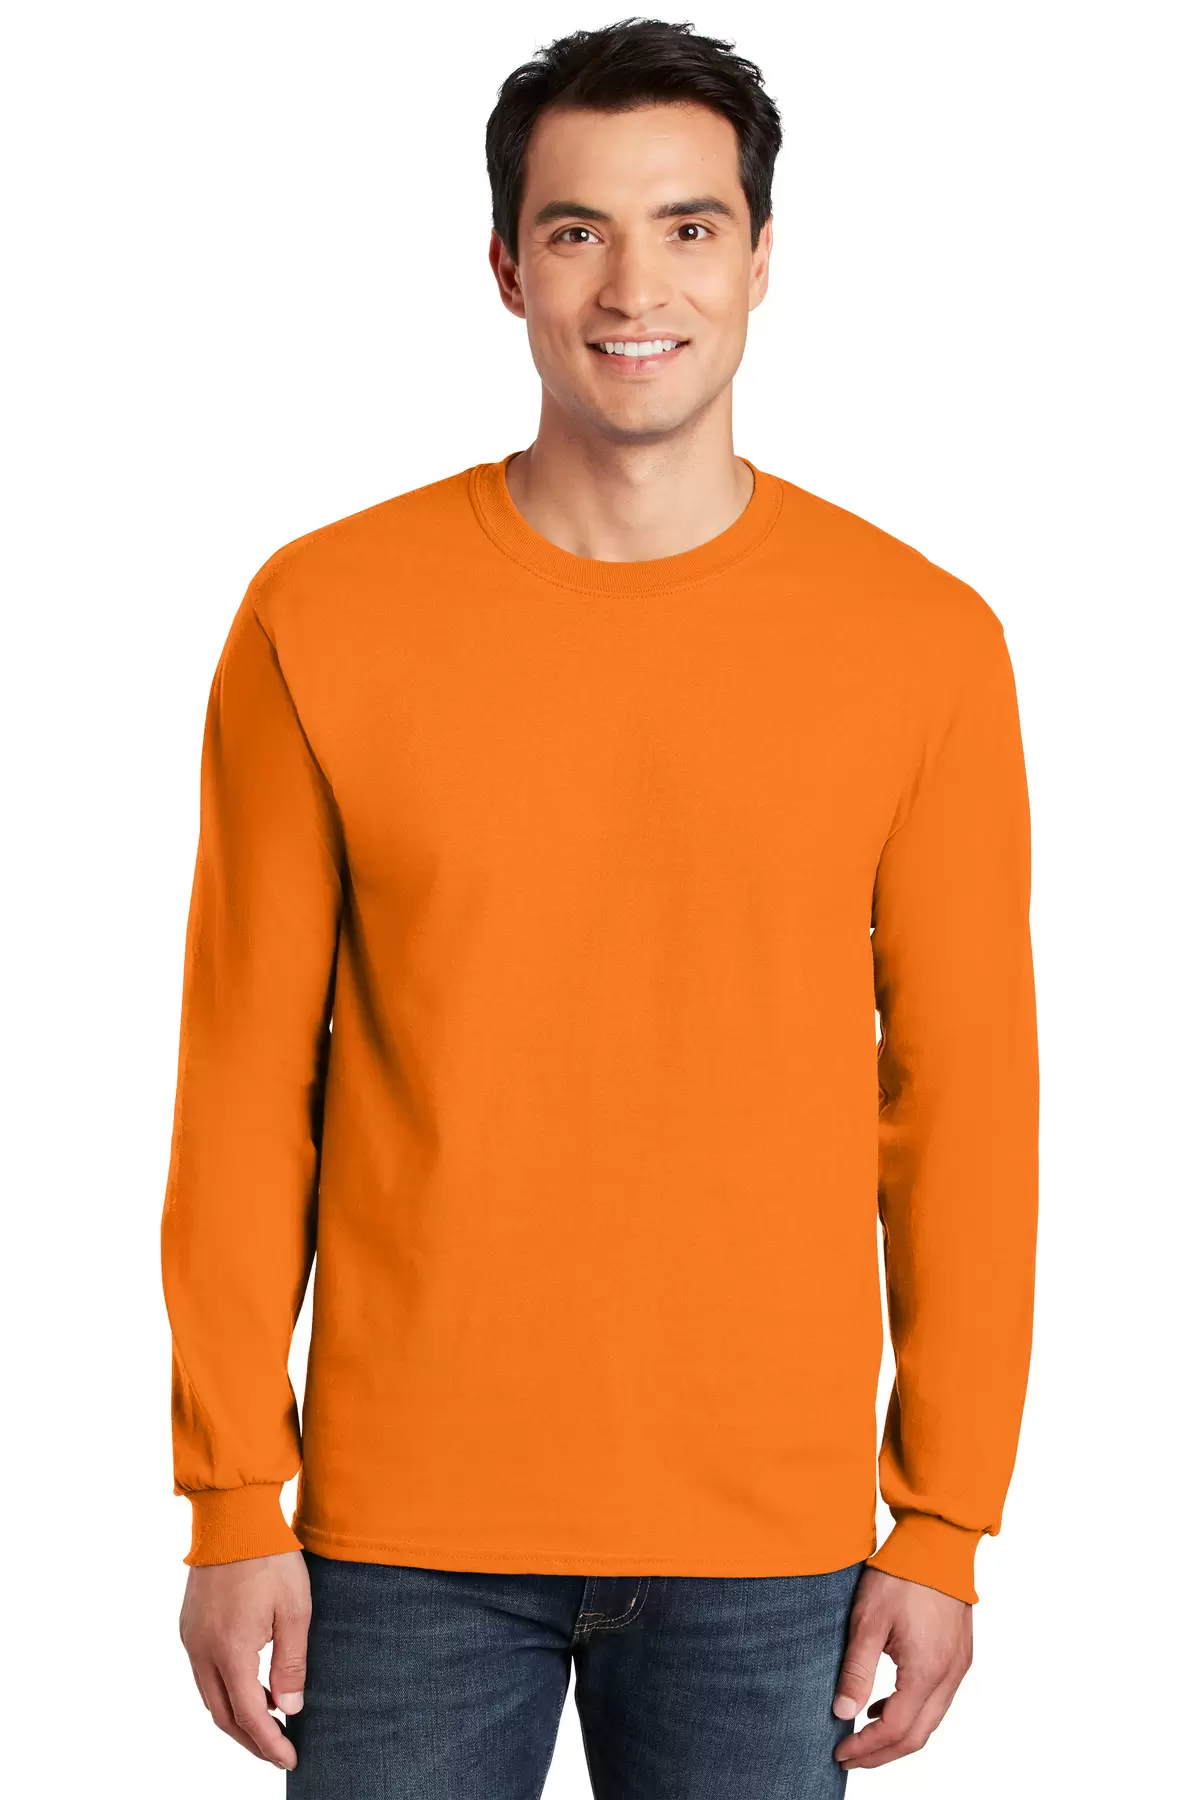 Gildan Mens Ultra Cotton T-Shirt, 2XL, Charcoal